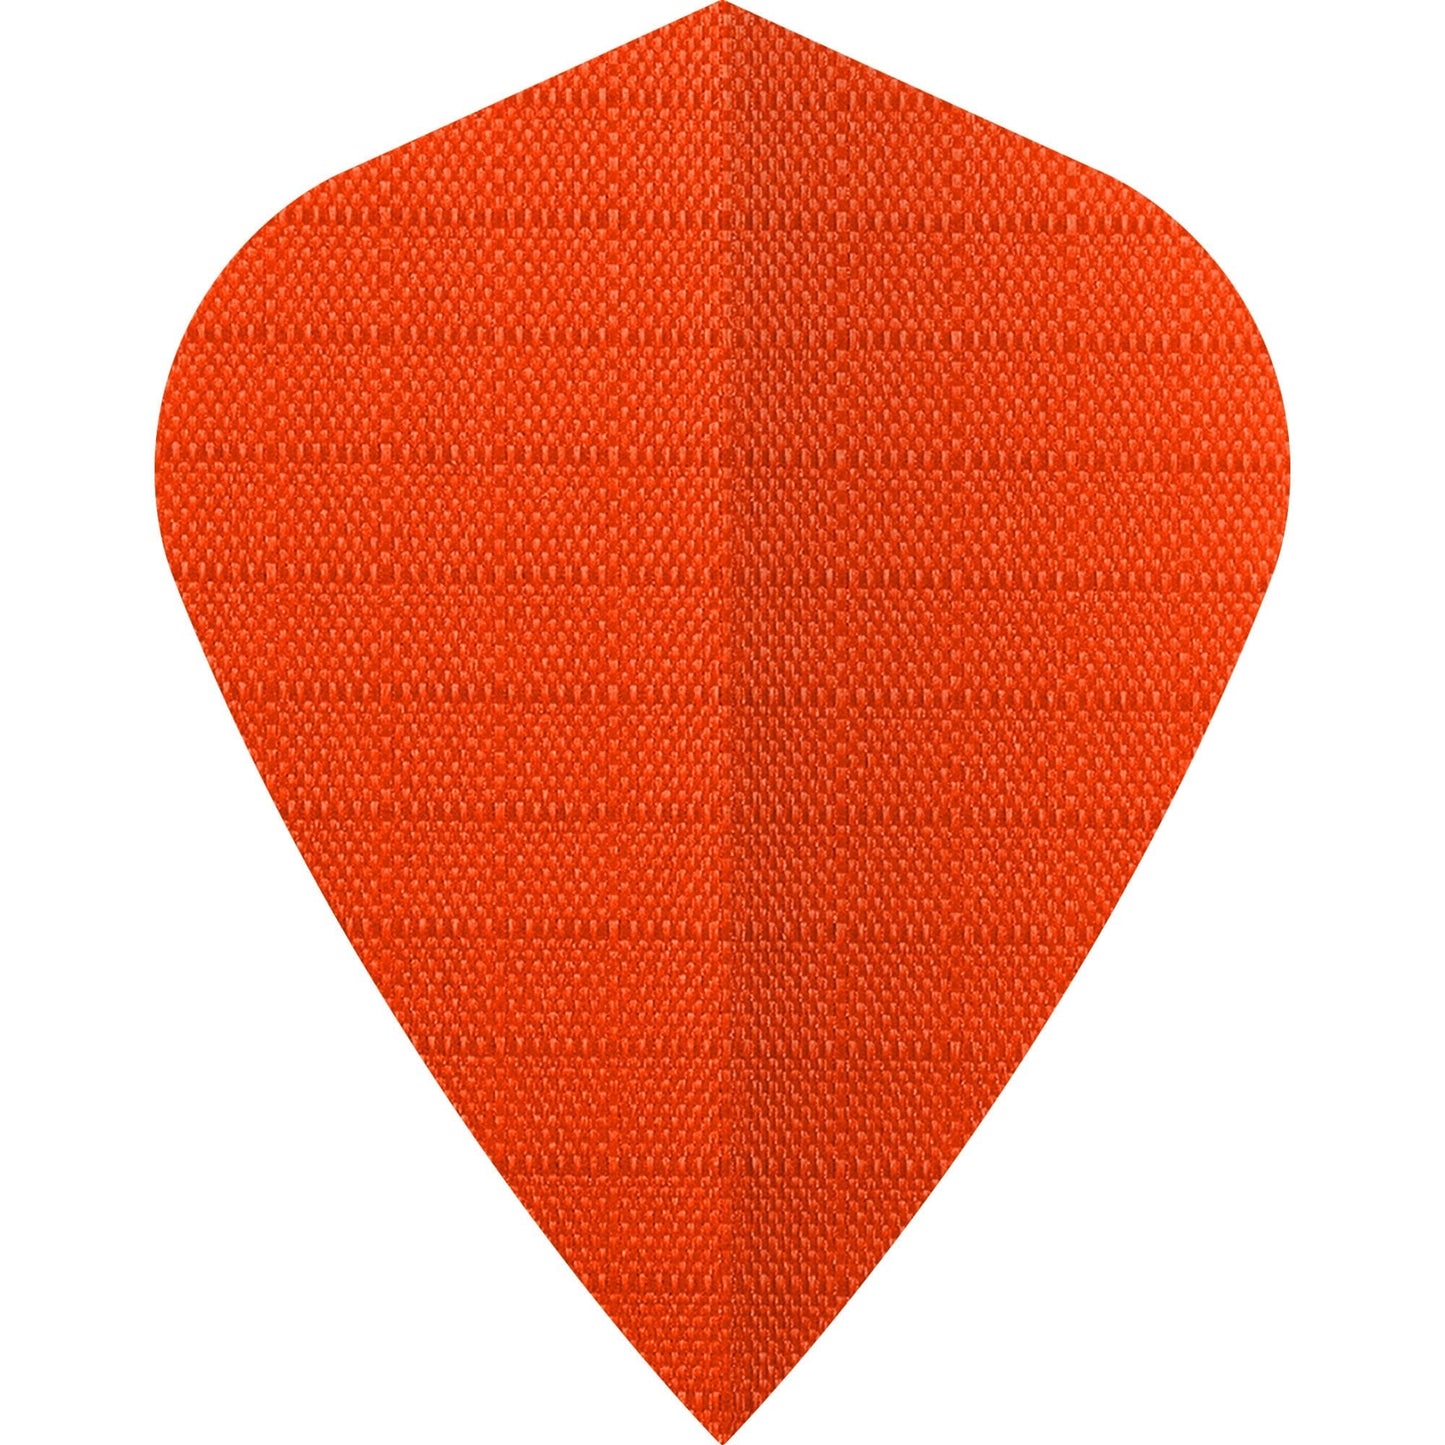 *Designa Dart Flights - Fabric Rip Stop Nylon - Longlife - Kite Fluro Orange